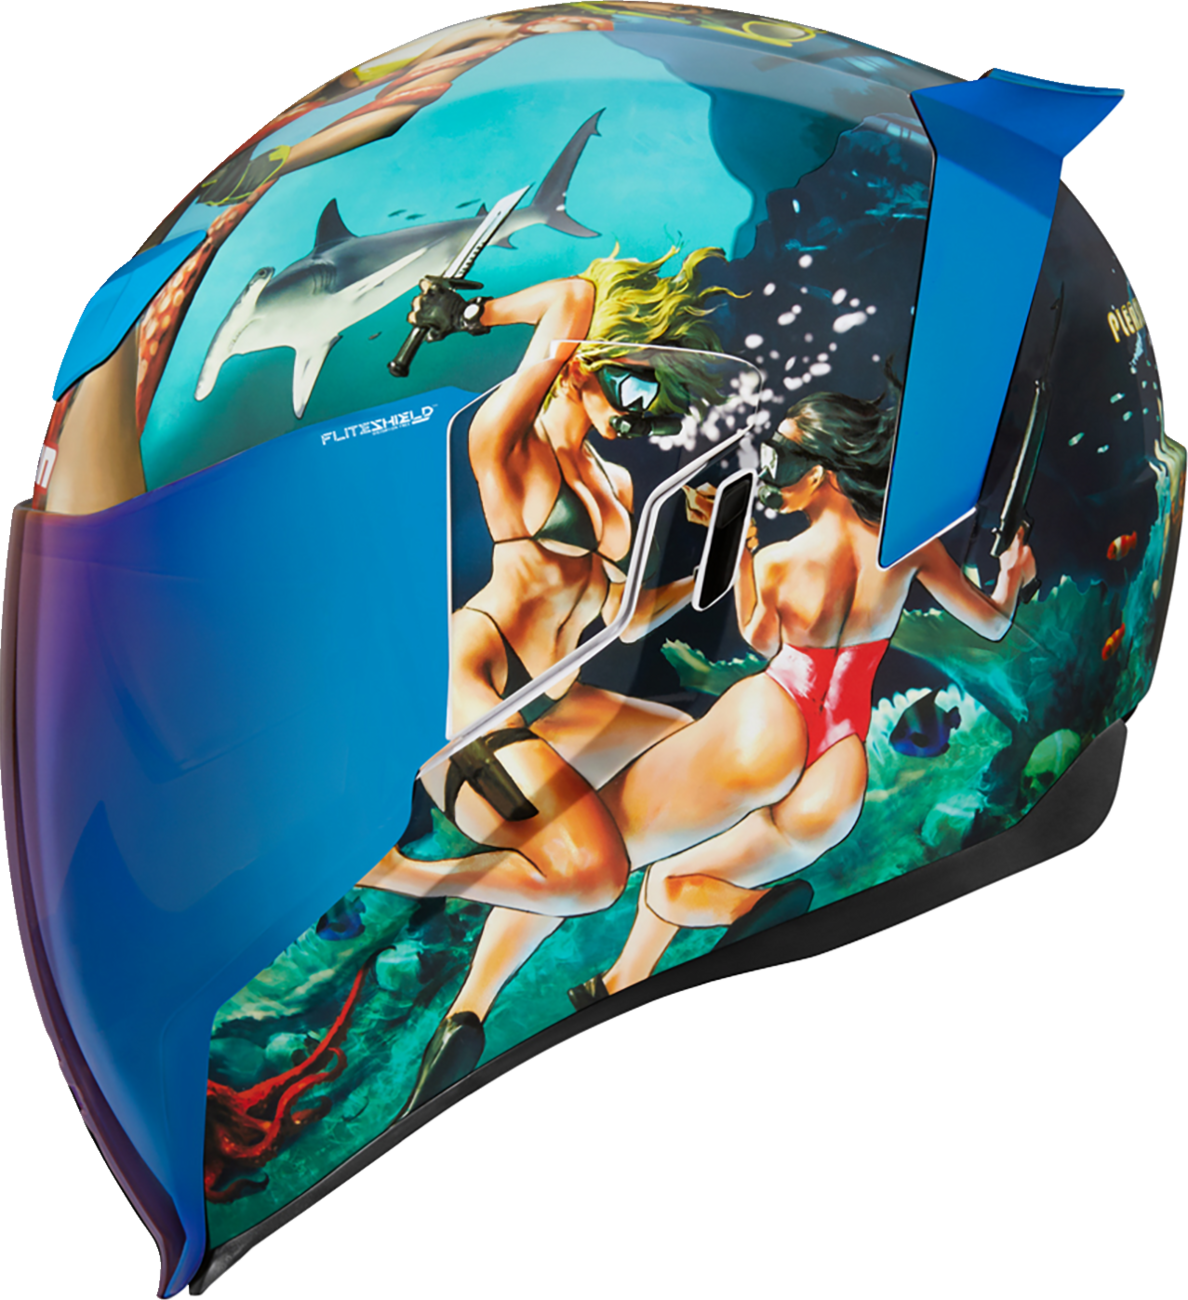 ICON Airflite™ Helmet - Pleasuredome4 - Blue - XL 0101-15004